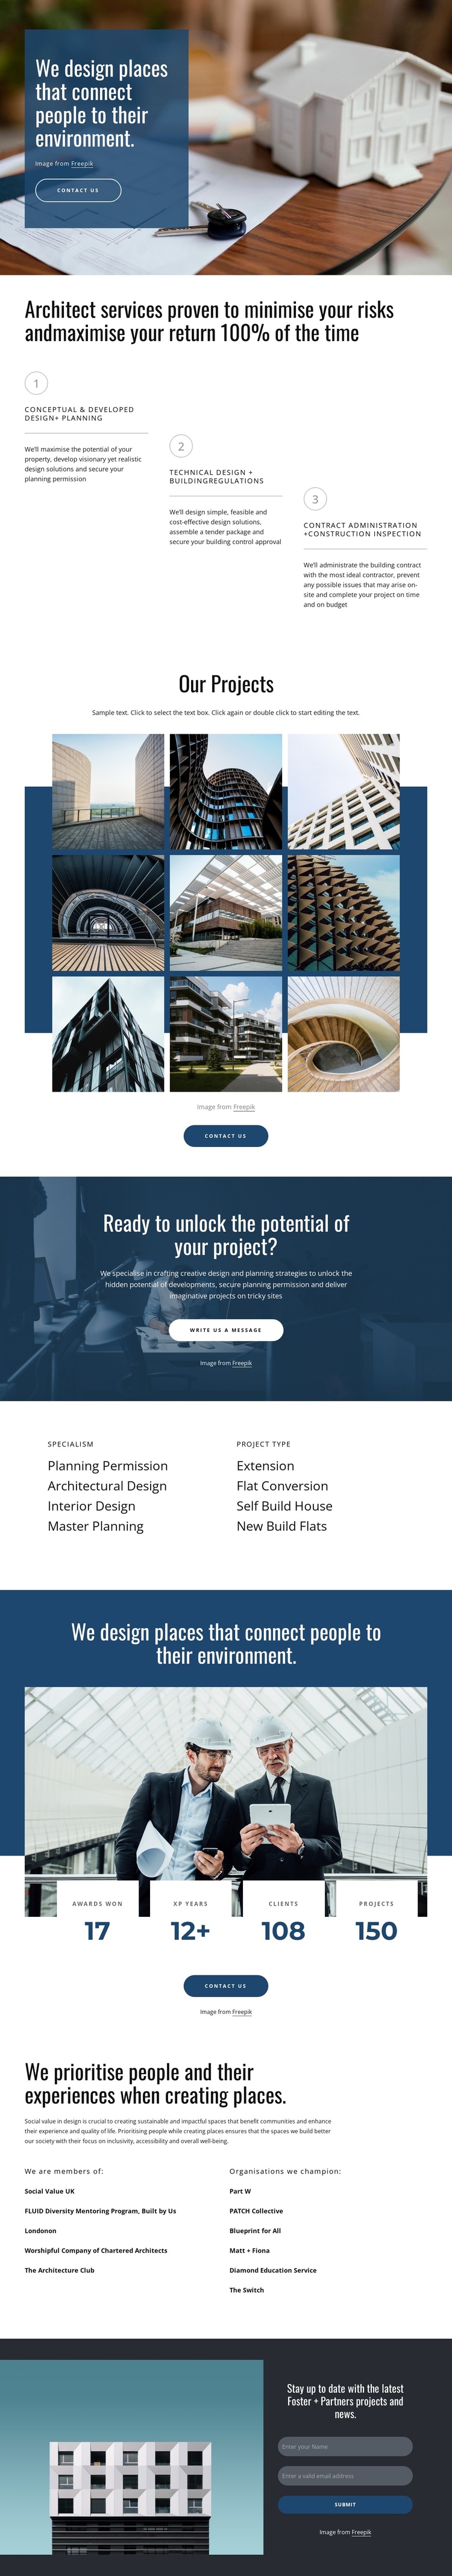 We design amazing projects Website Builder Software